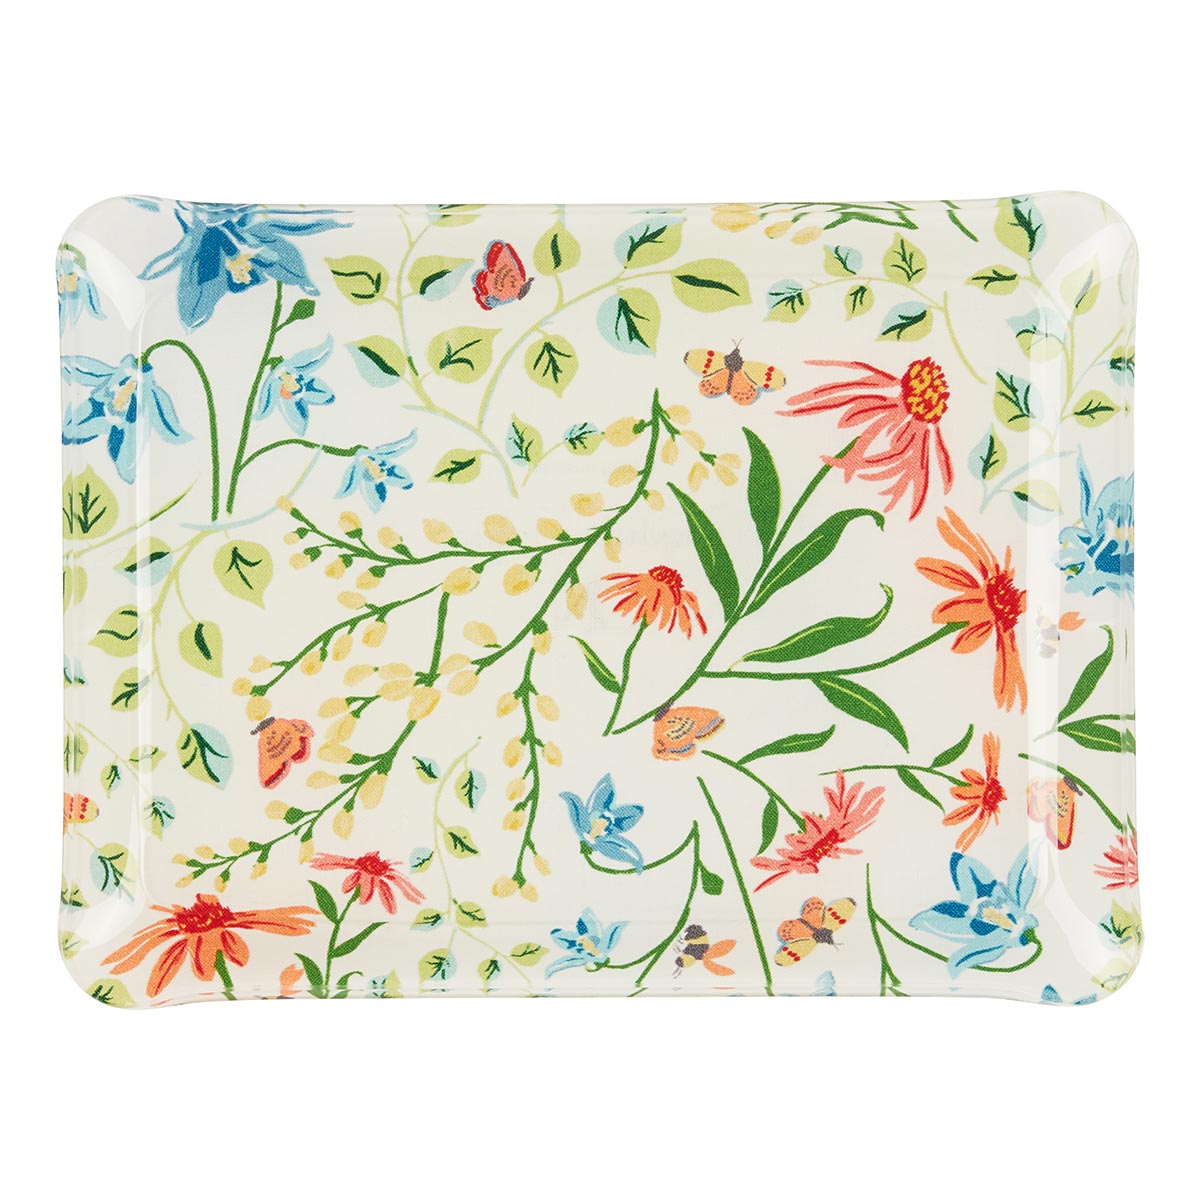 Nina Campbell Fabric Tray Small - Multi Floral